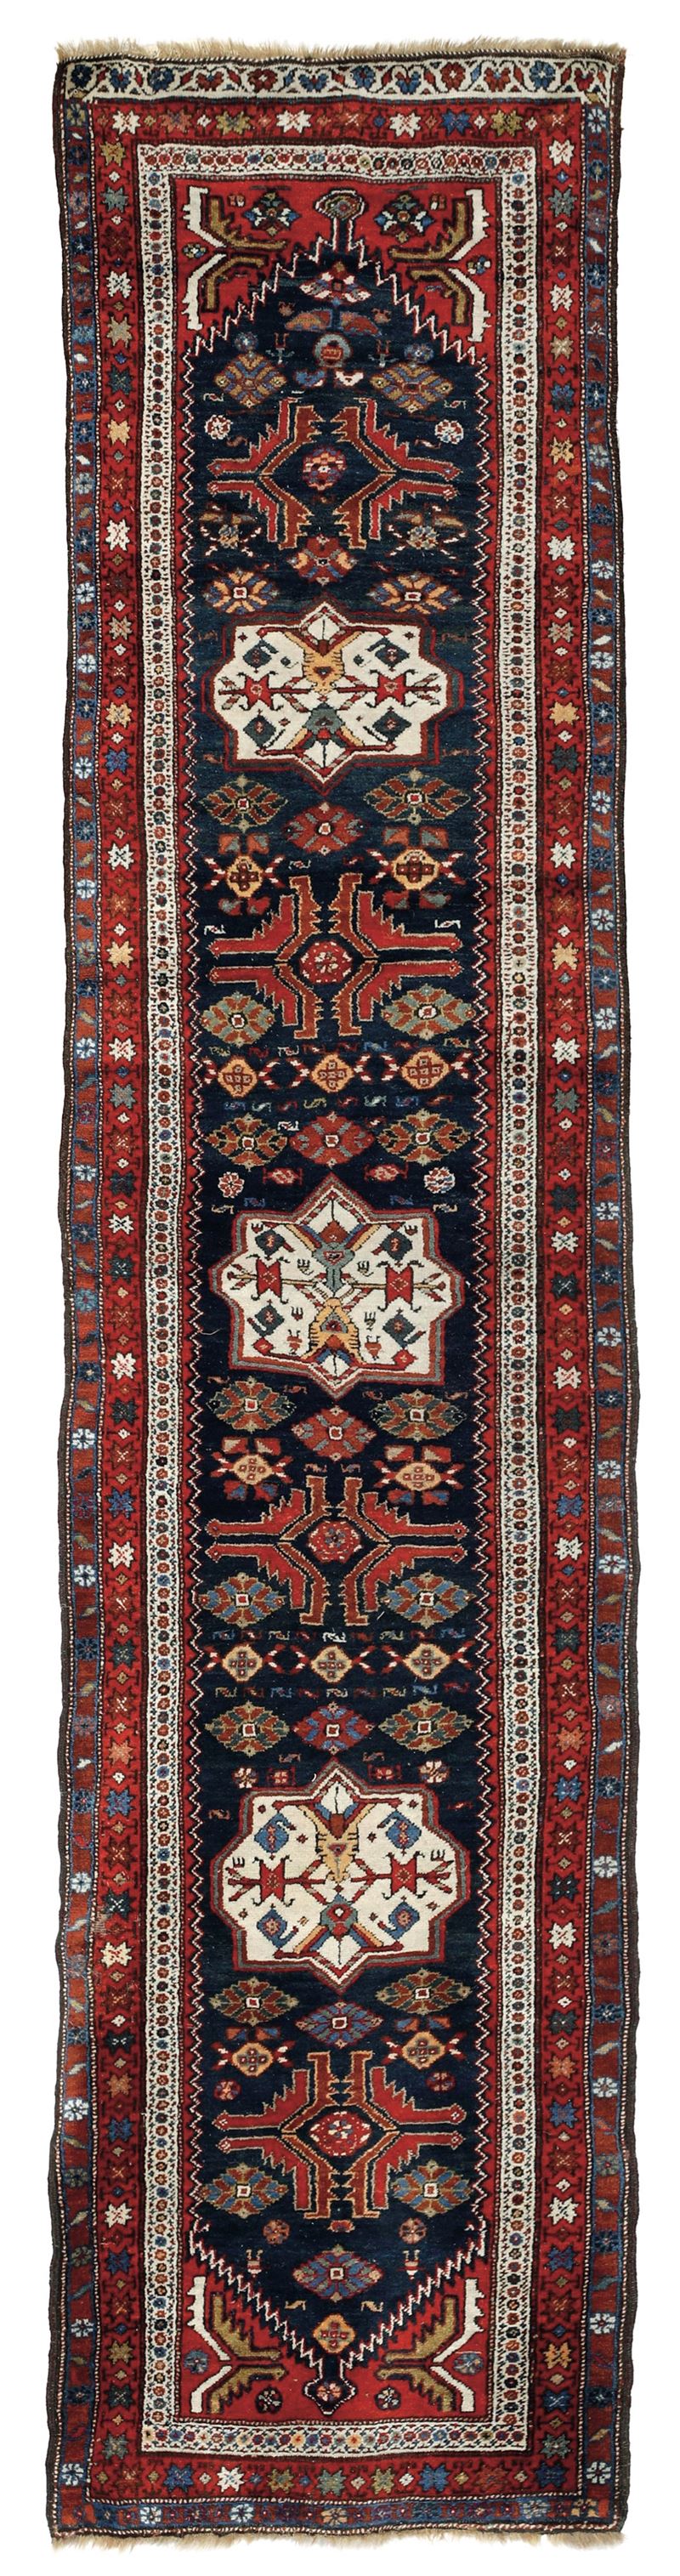 Galleria Karabagh, inizio XX secolo  - Auction Antique carpets - Cambi Casa d'Aste